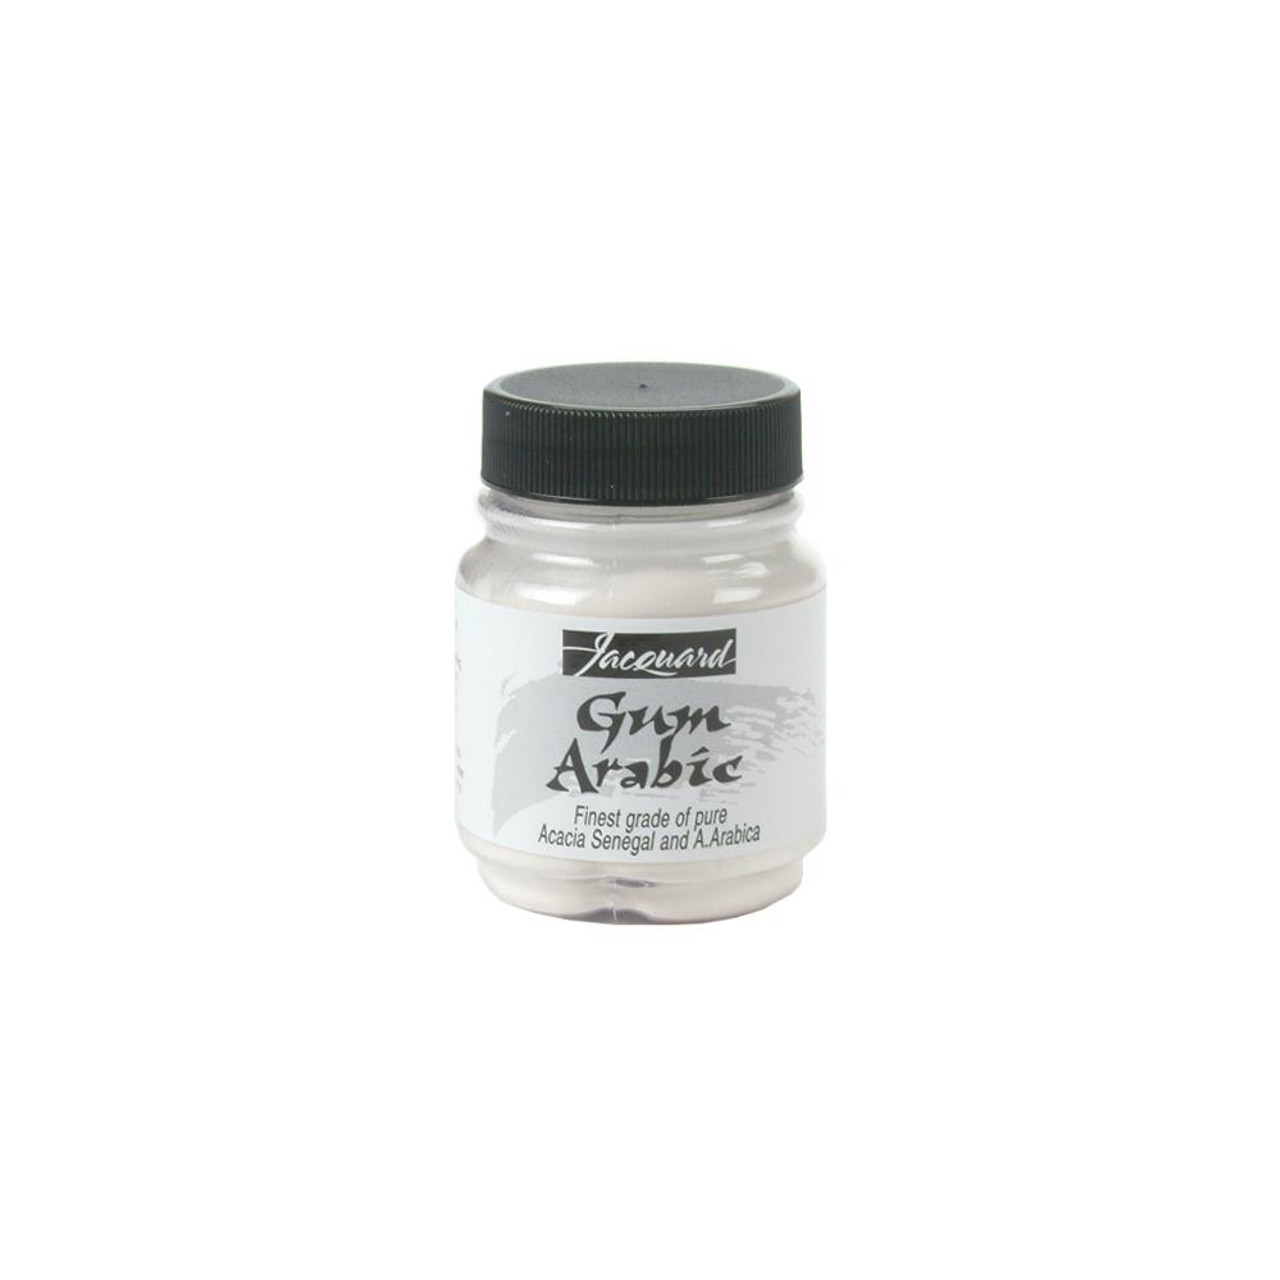 Liquitex Non-Toxic Modeling Paste Acrylic Medium, 1 Gallon